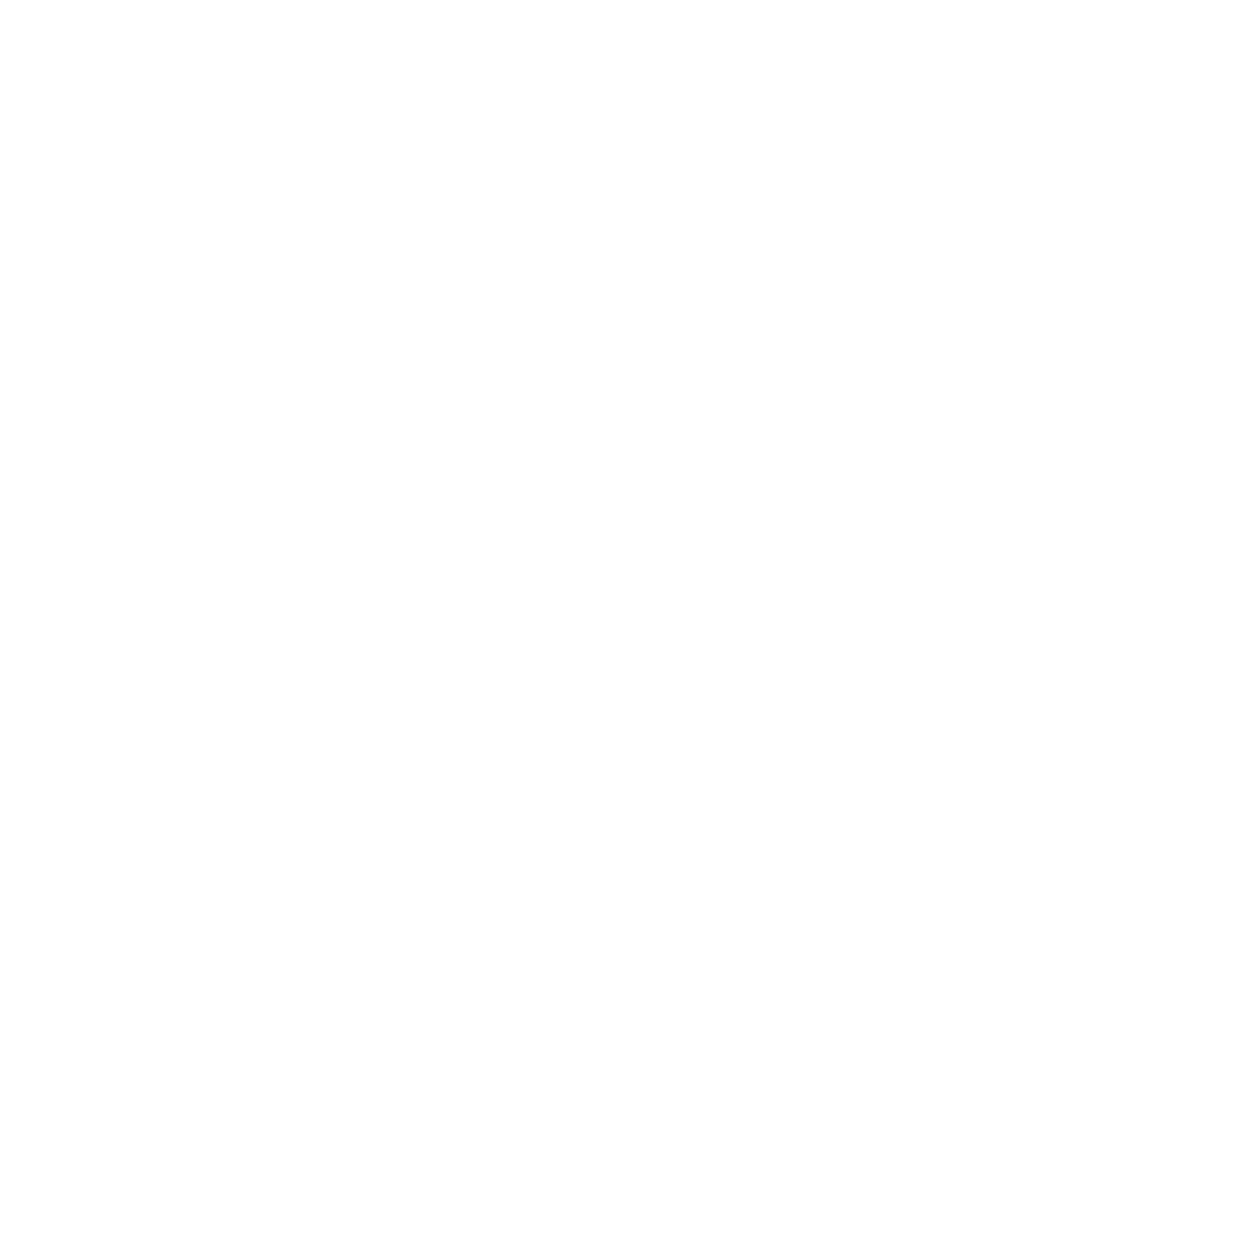 Сакен Нарынов Шесть жизней Одной Души, 2014 металл, проволока, плетение 60 х 115 х 115 см 